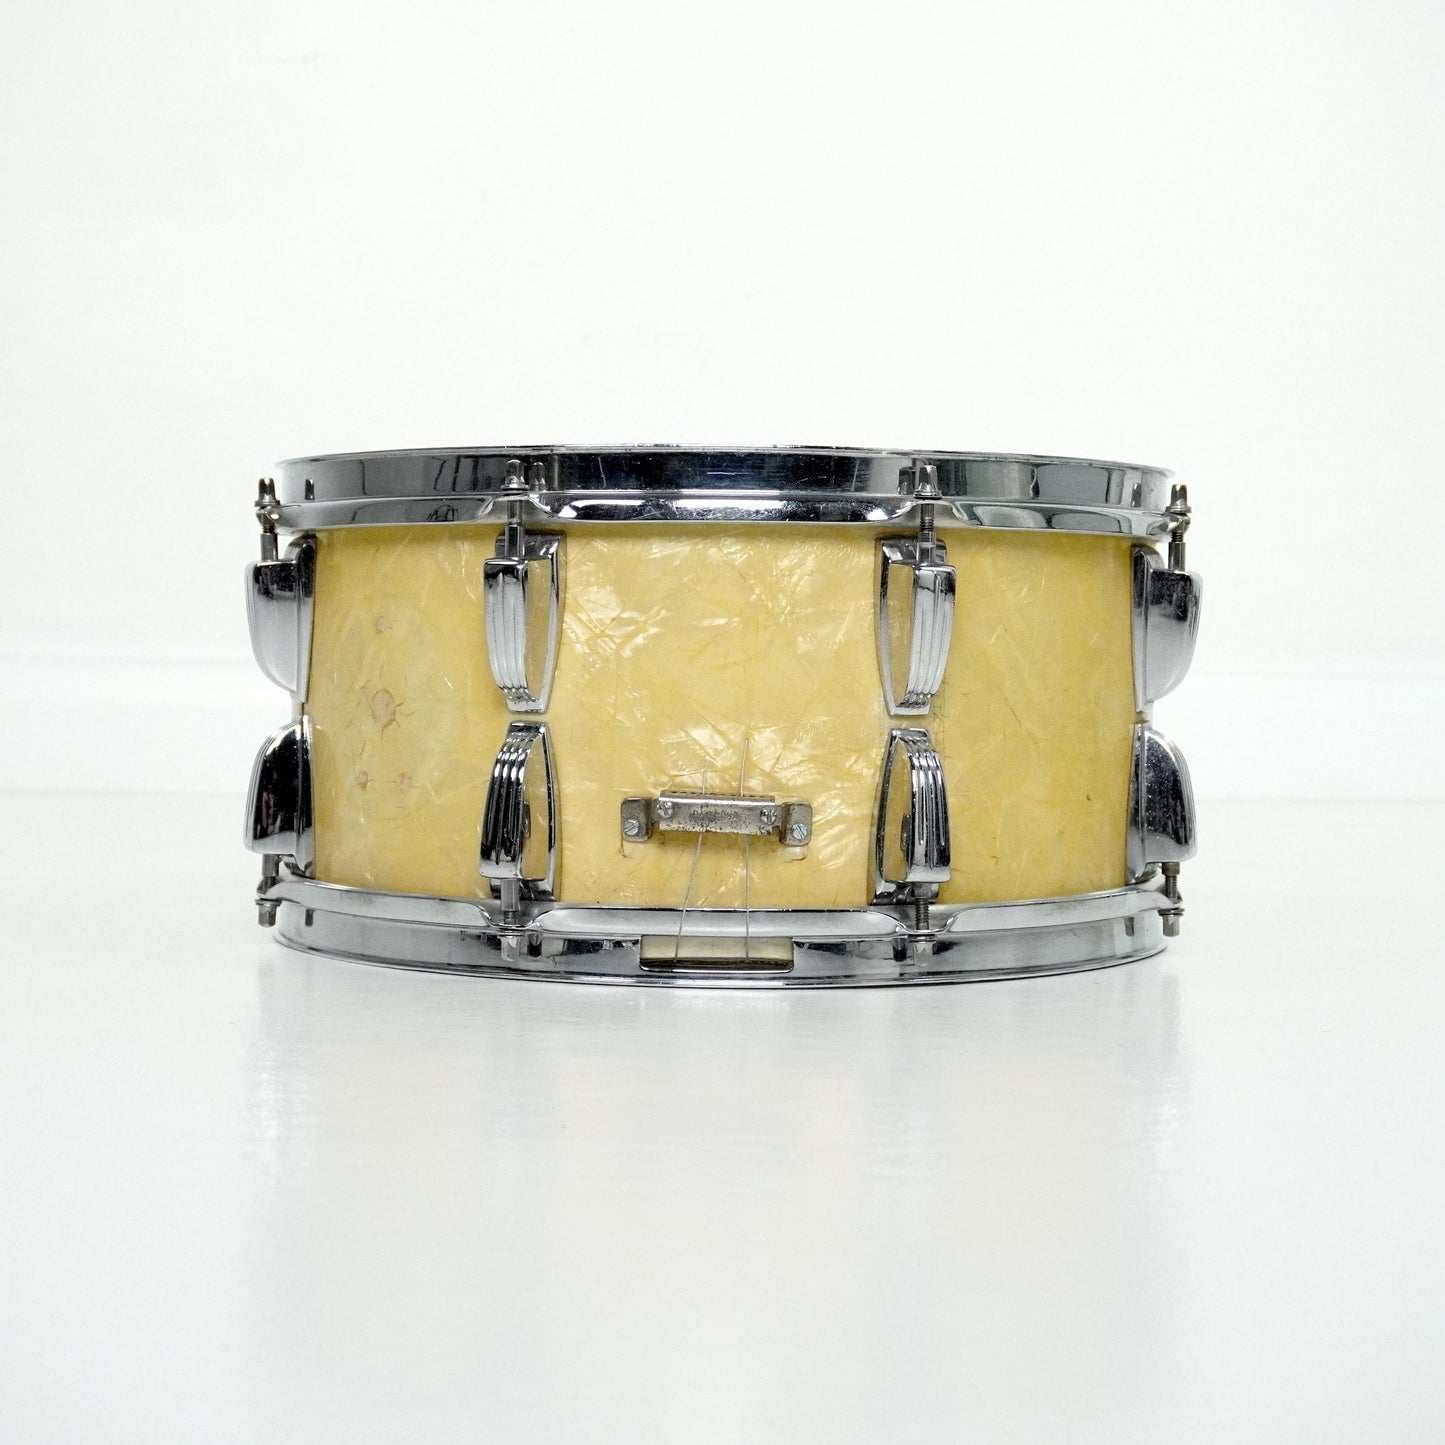 WFL 14” x 6.5” Festival Snare Drum in White Marine Pearl